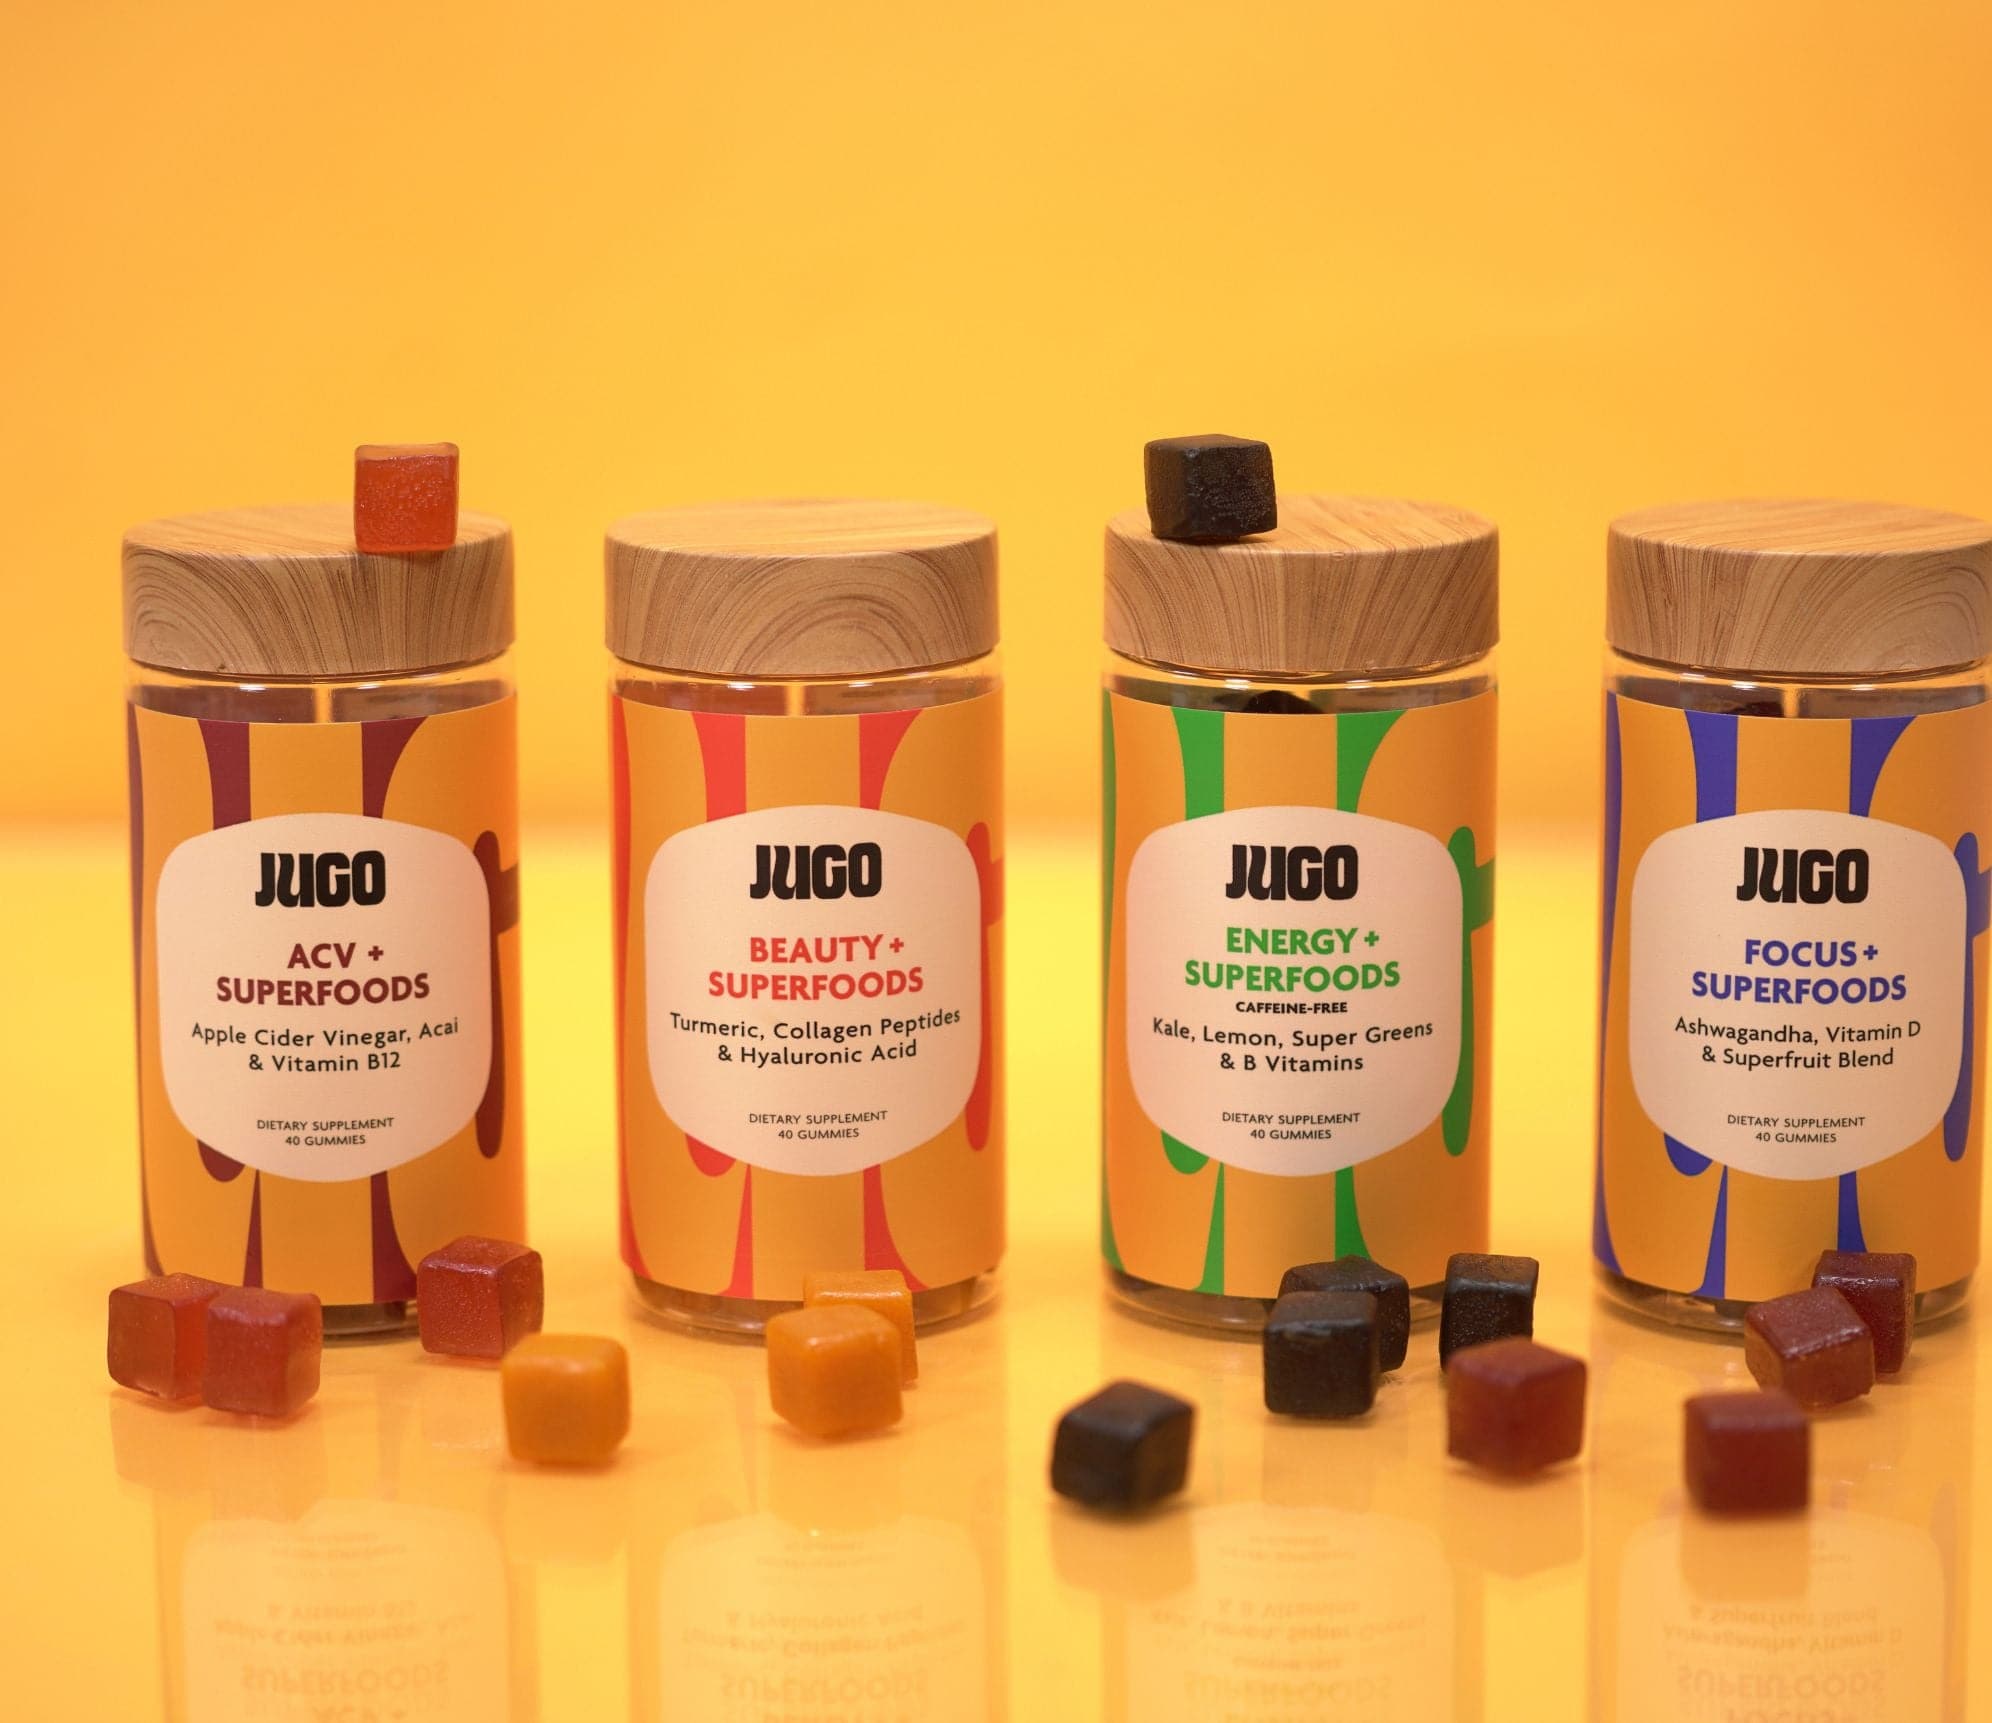 JUGO Starter Gummy Bundle made with superfoods